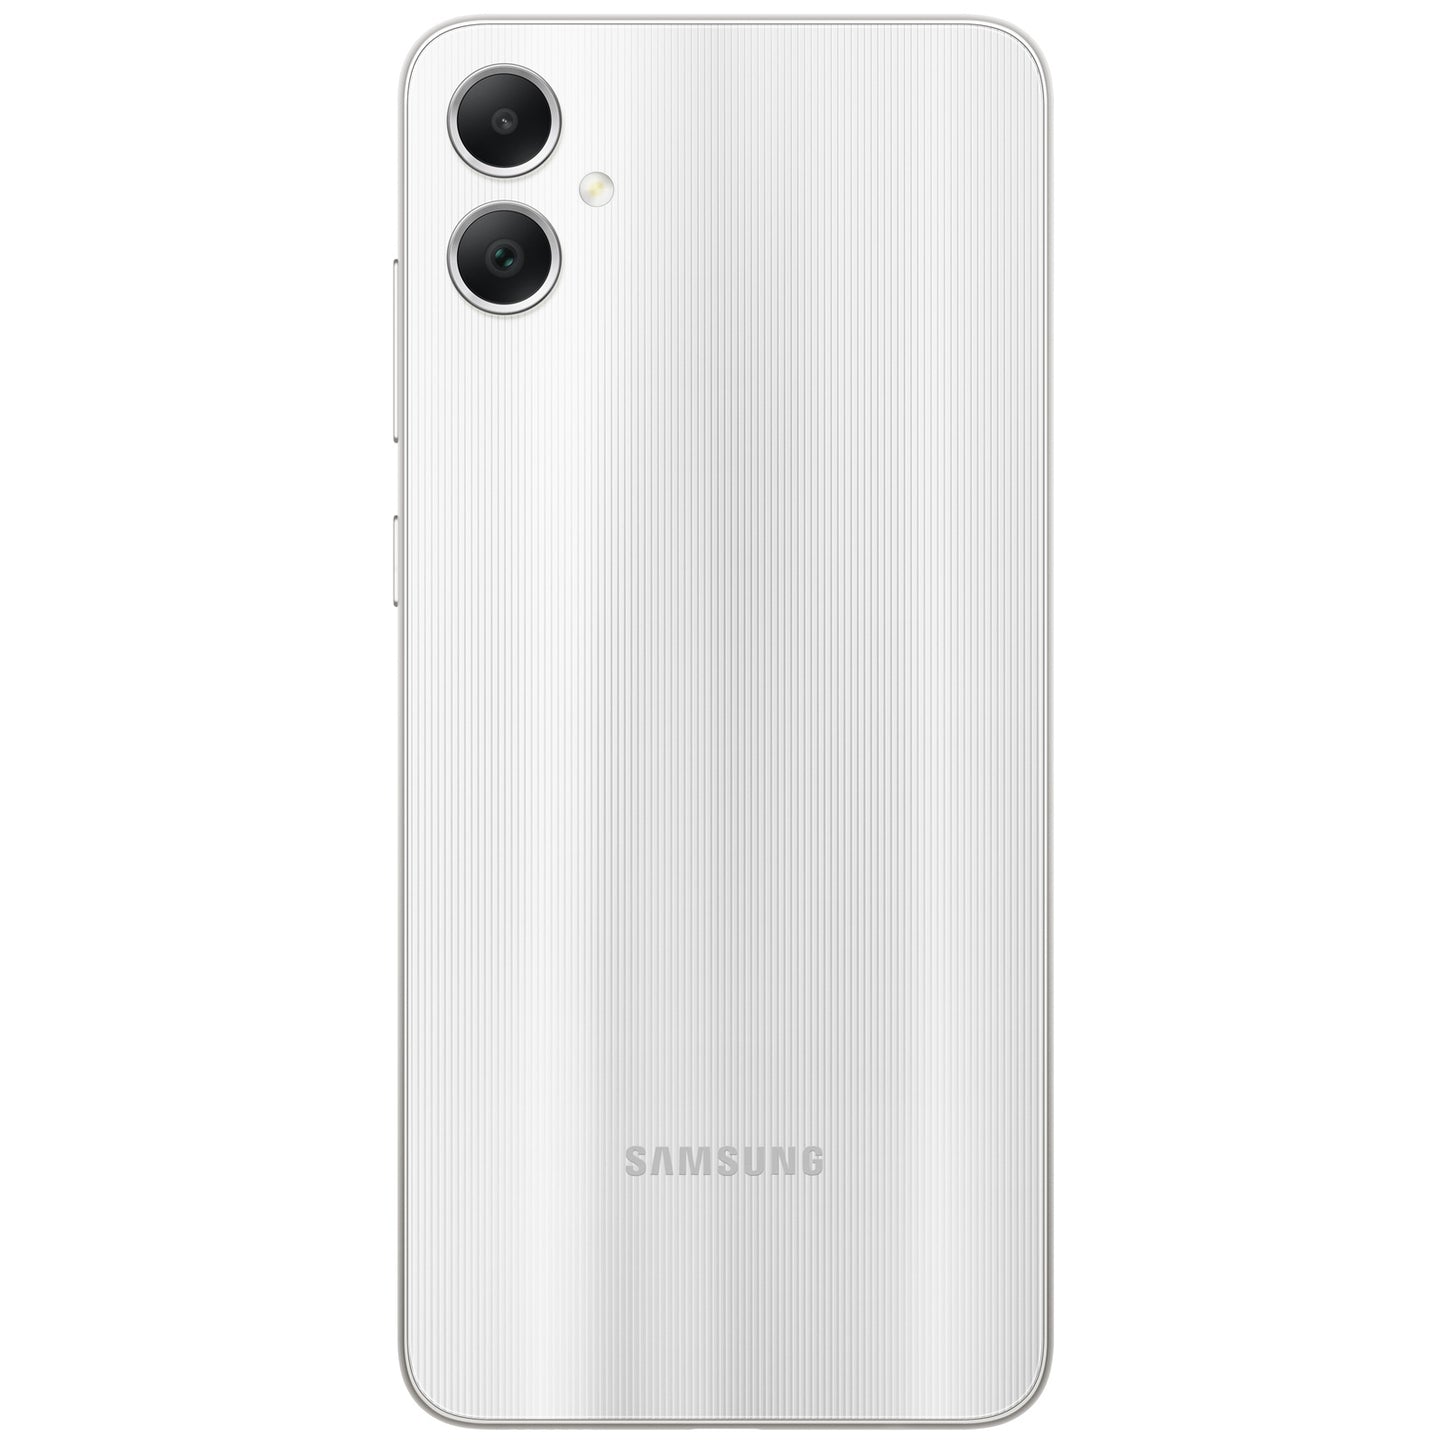 Samsung Galaxy AO5 64GB Silver Brand New